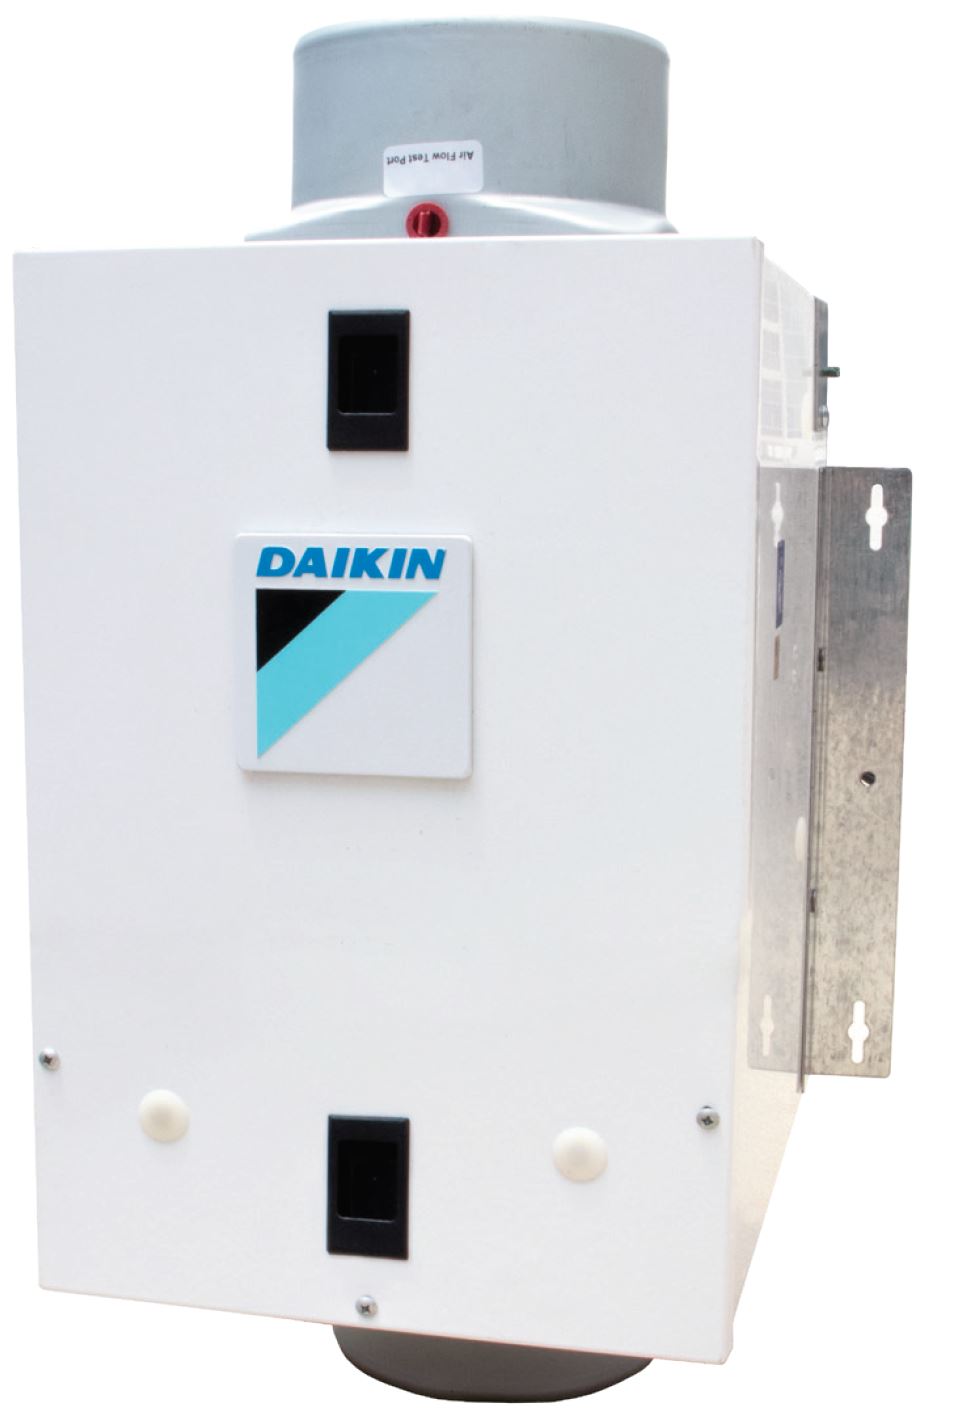 daikin-one-powered-ventilator